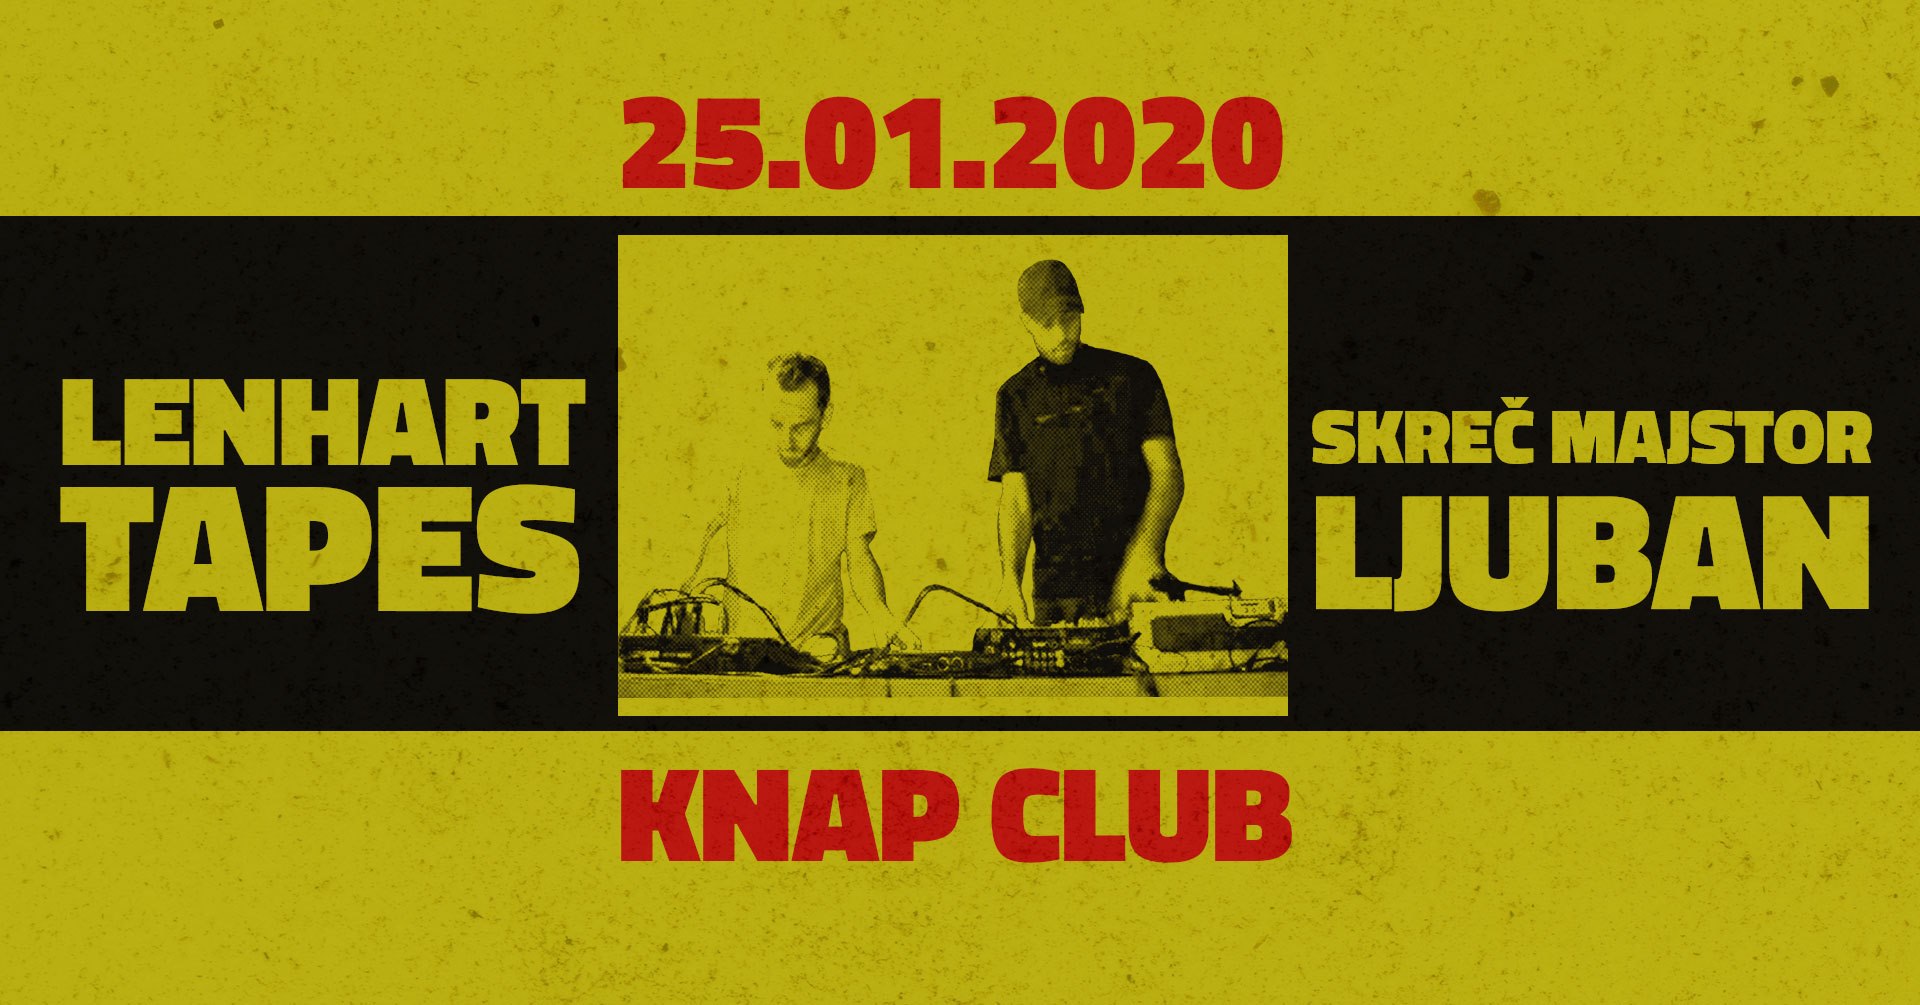 Lenhart Tapes & Skreč majstor Ljuban 25.01.2020. Knap Club